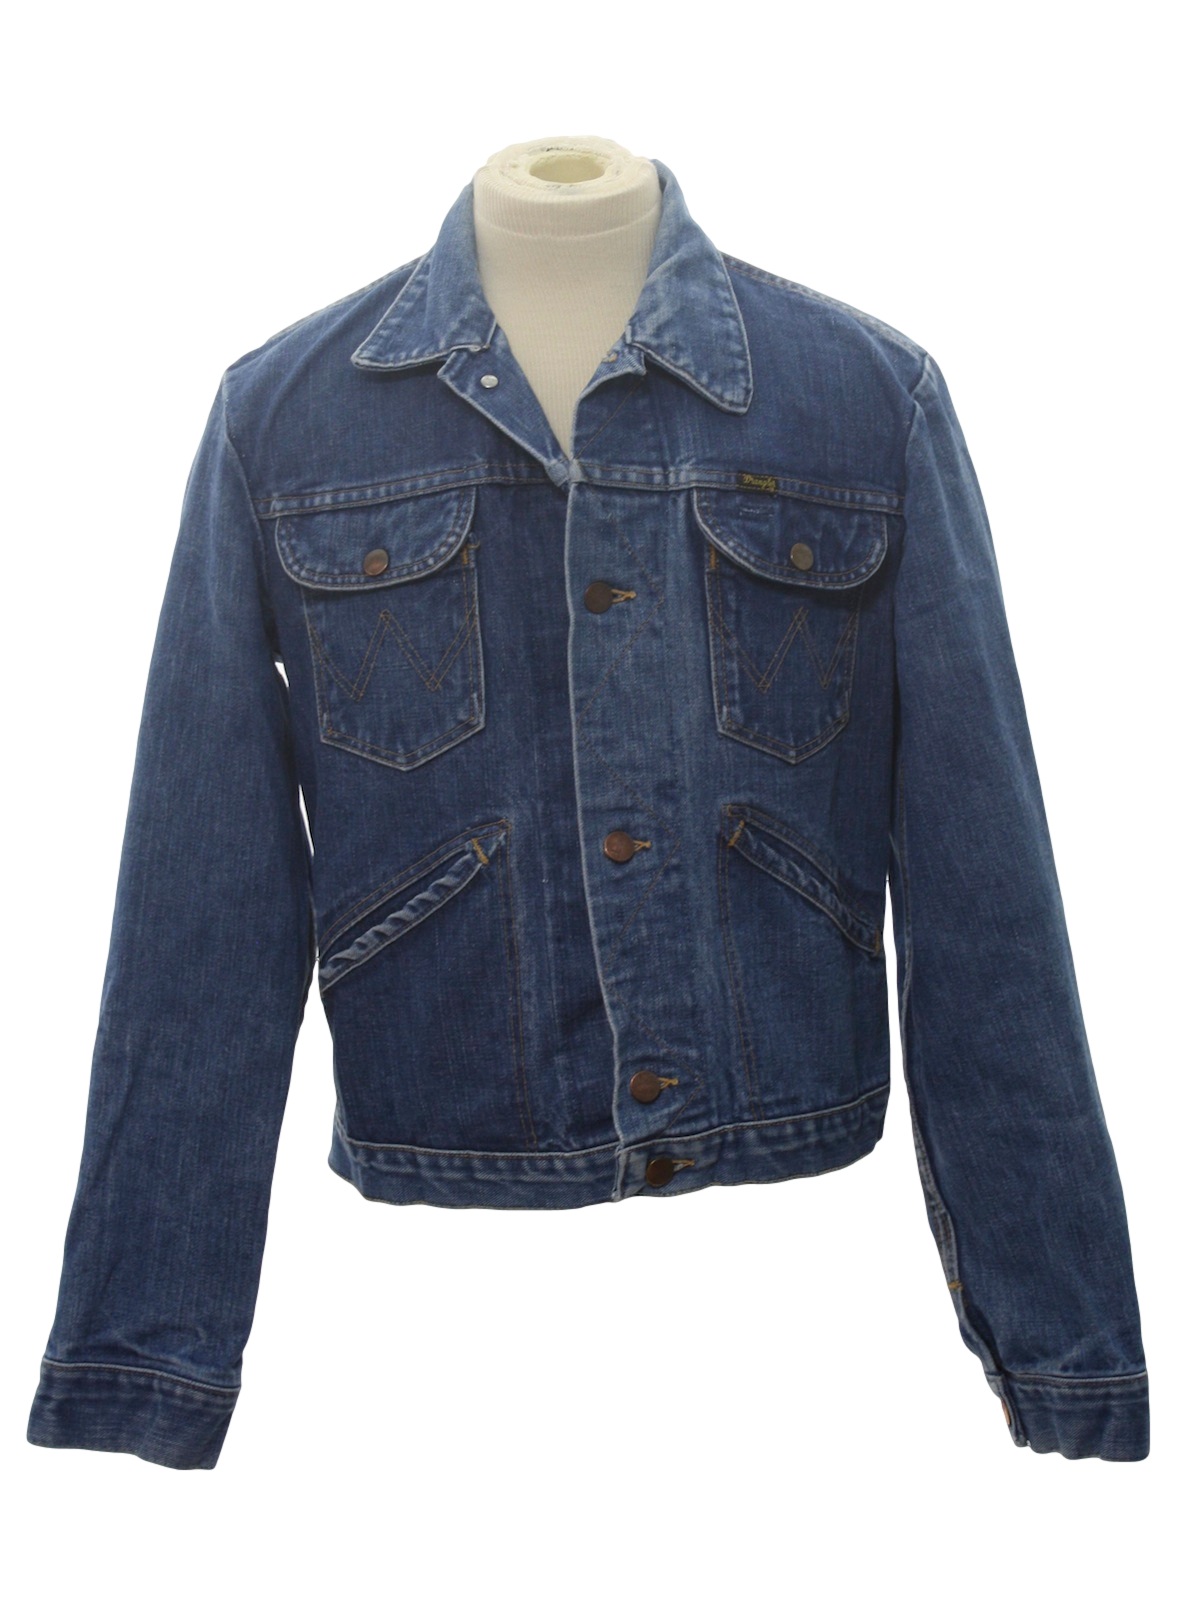 Wrangler USA 1970s Vintage Jacket: 70s -Wrangler USA- Mens blue ...